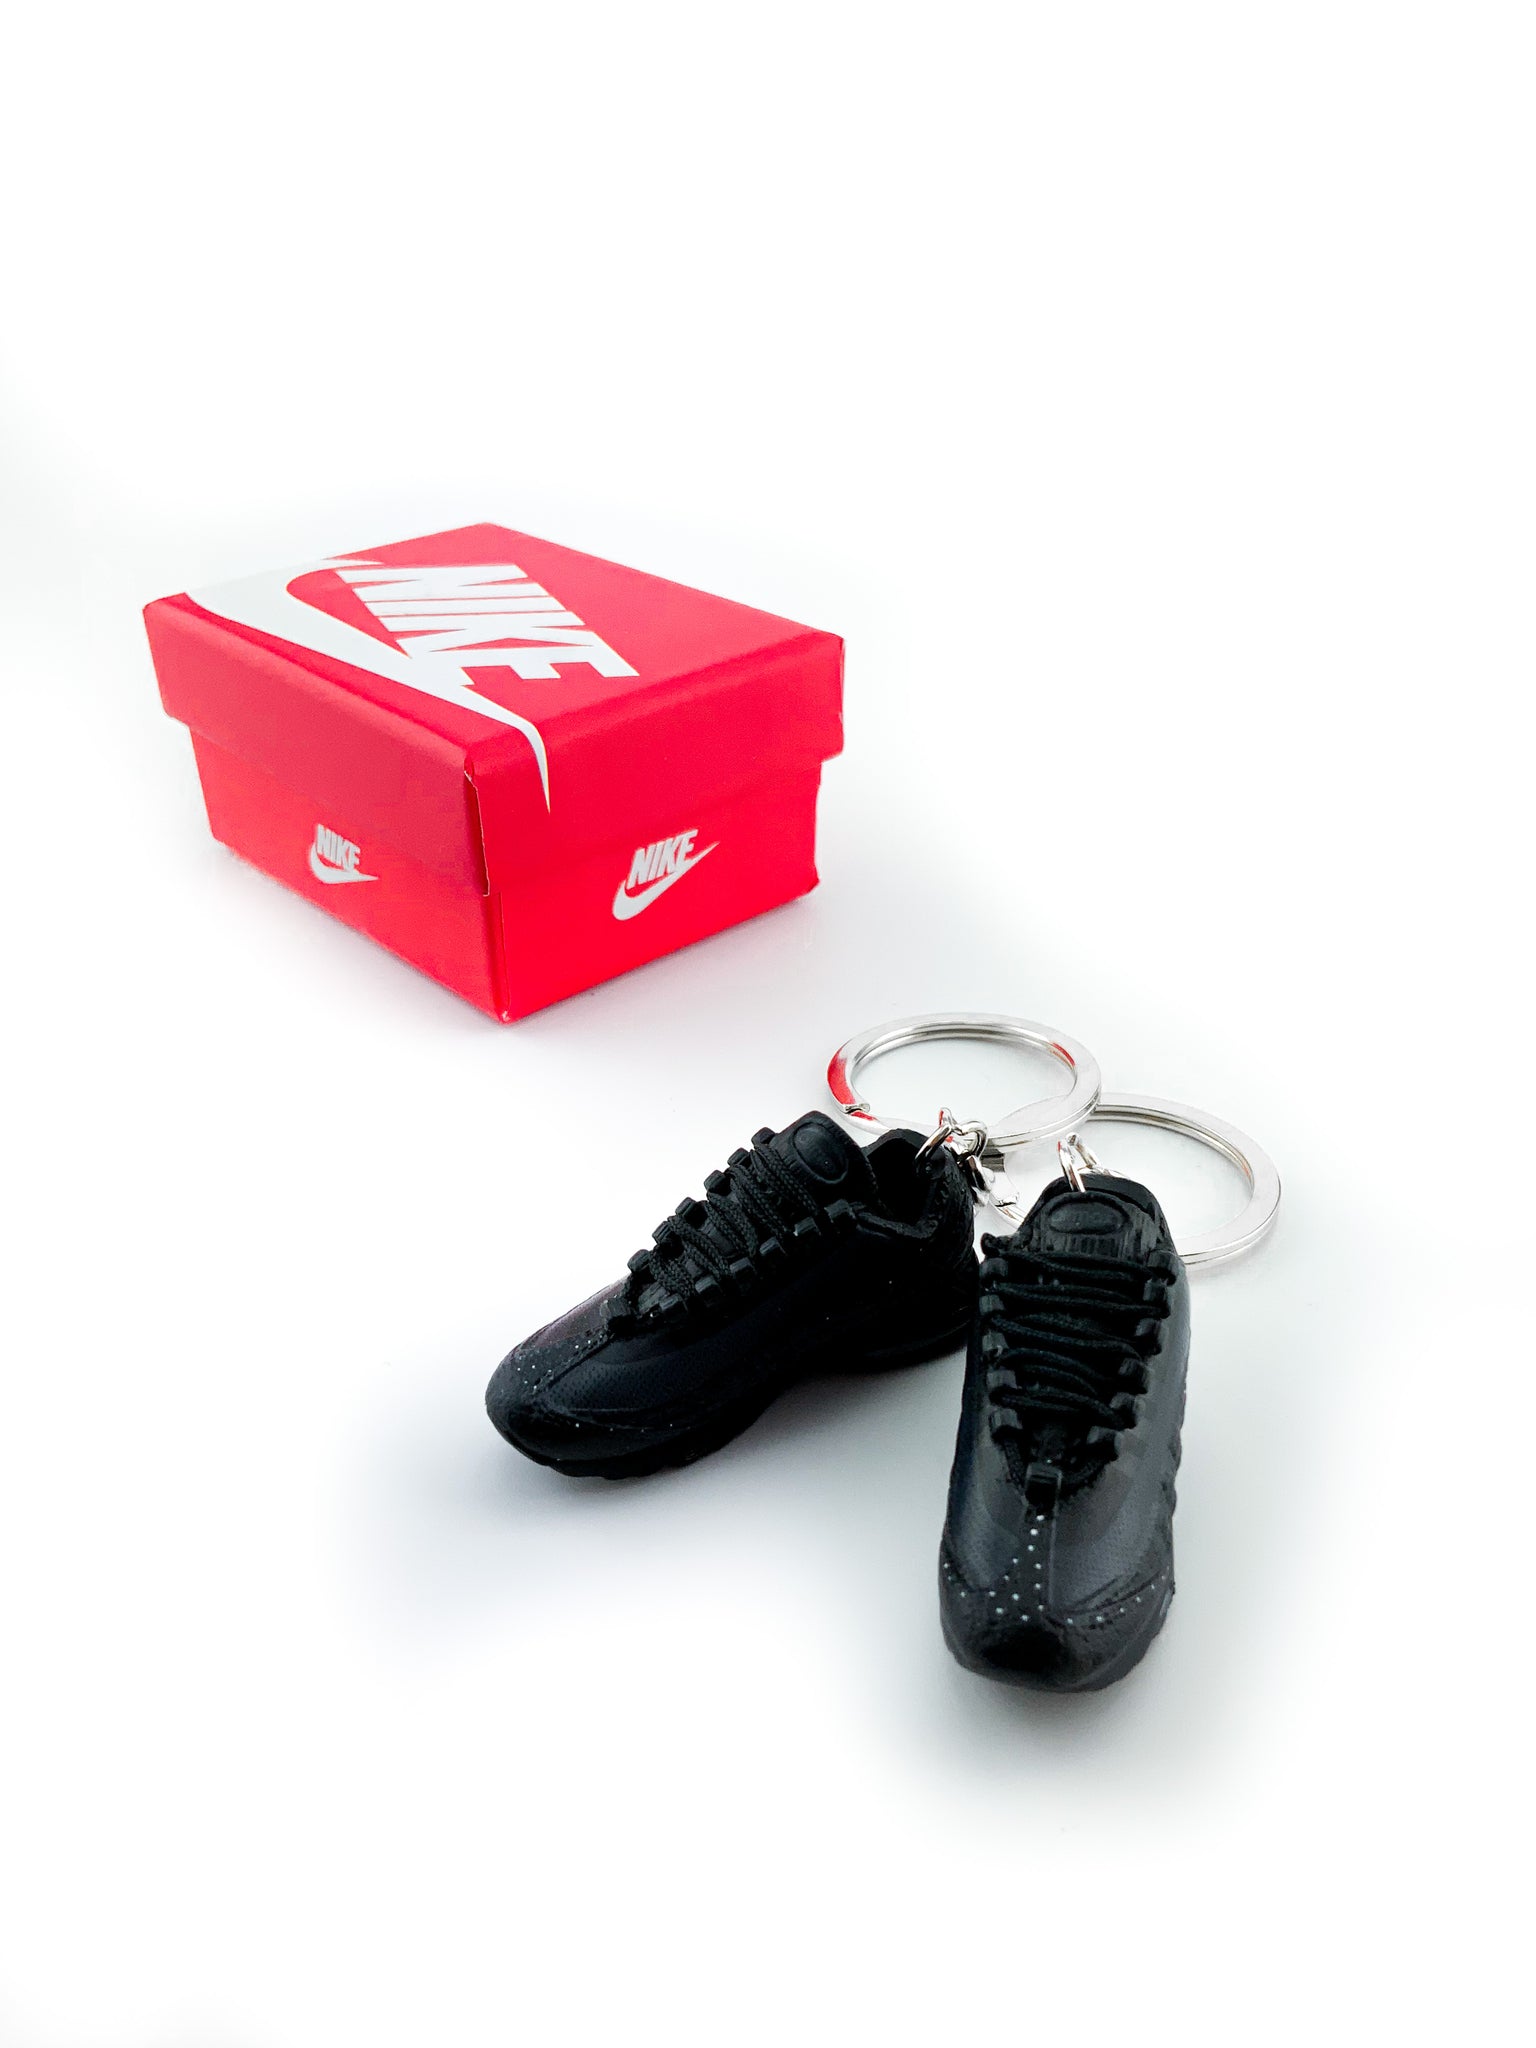 Mini Nike Air Max 95 Essential Black Replica Keychain - KLOUD9